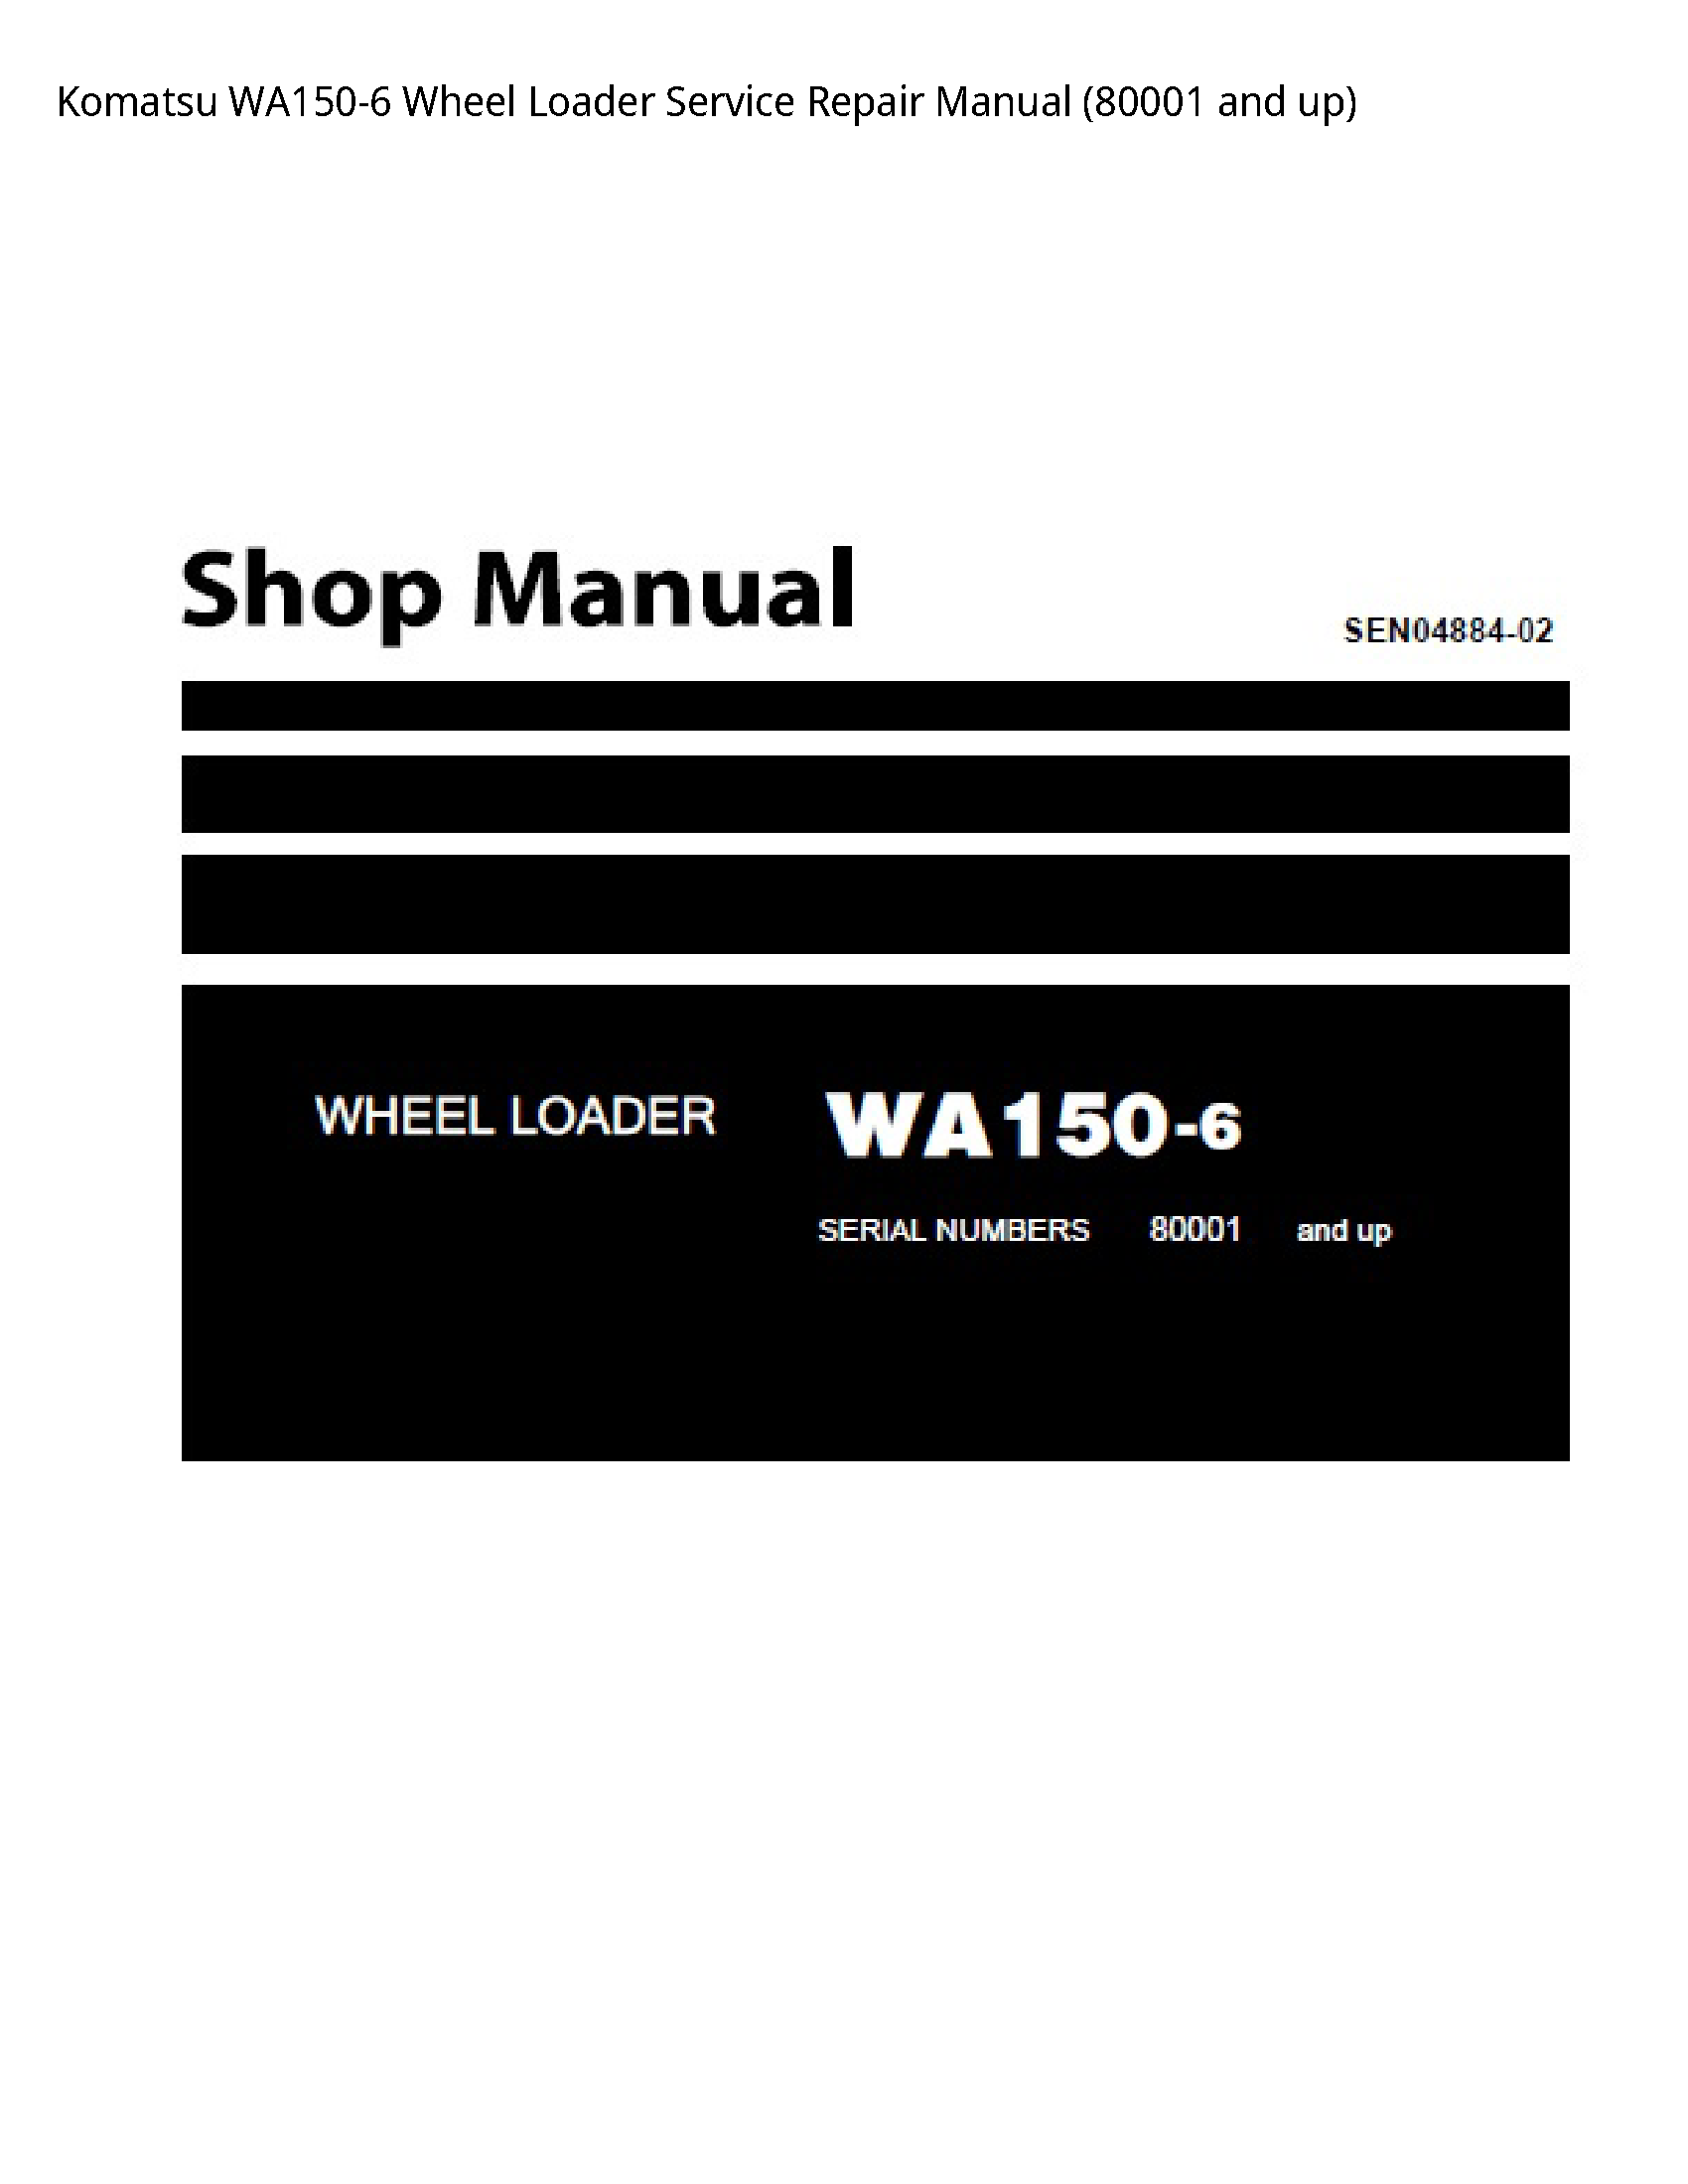 KOMATSU WA150-6 Wheel Loader manual